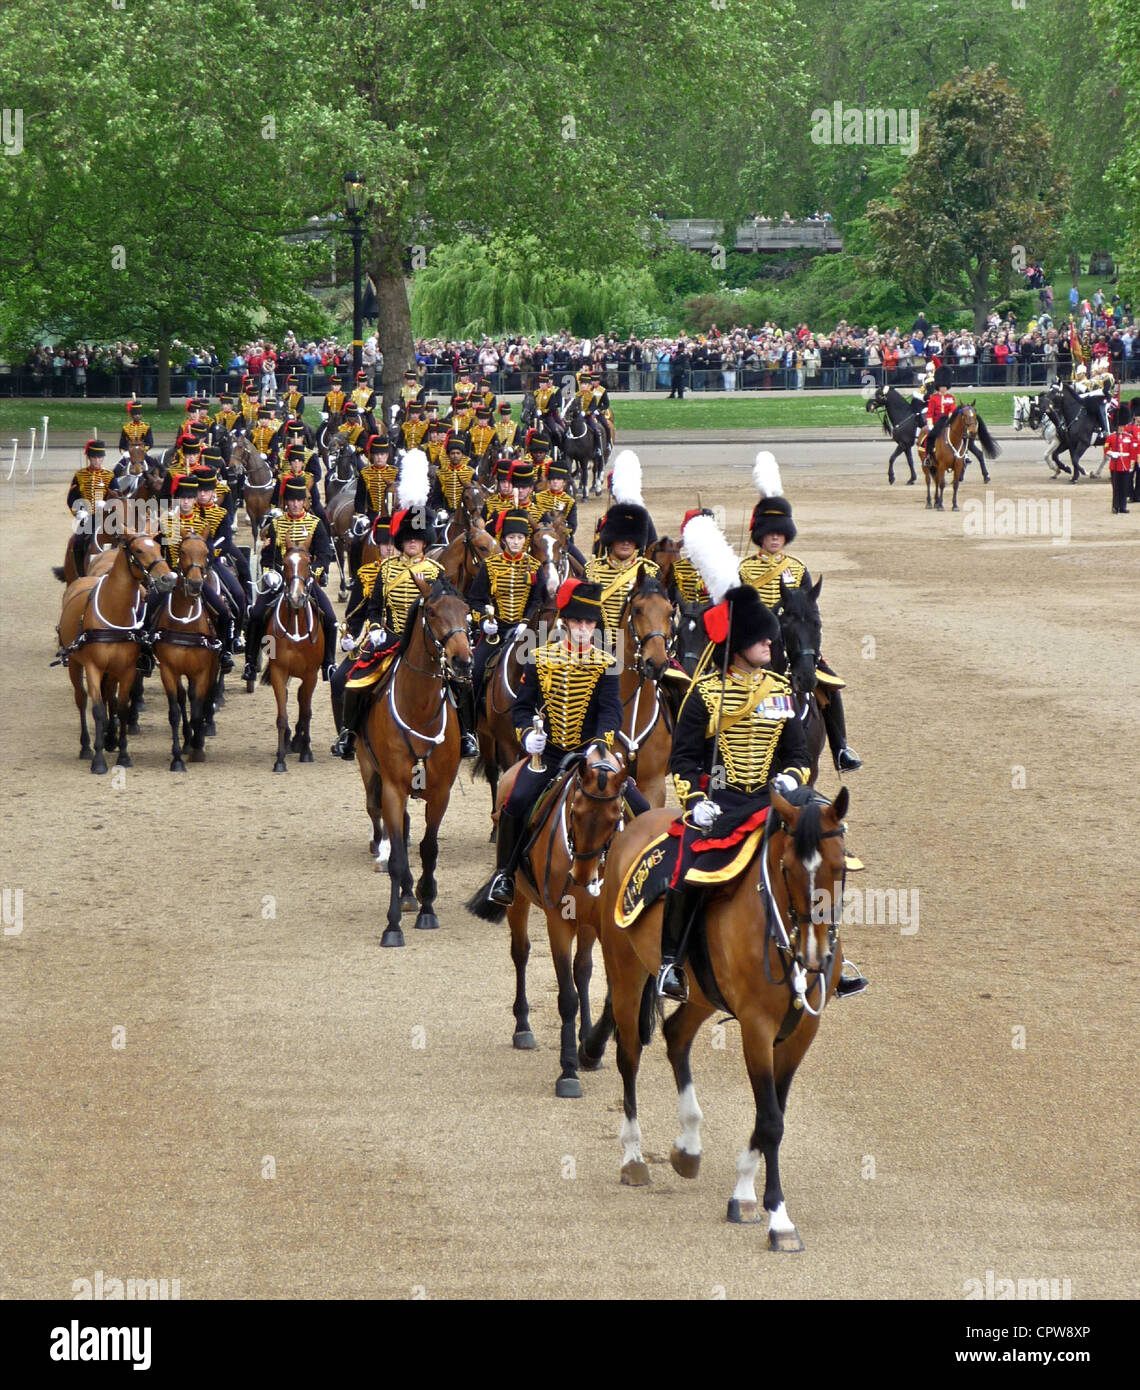 Trooping die Farbe 2. Juni 2012 - der Generalmajor Review bei Horseguards Parade in London. Des Königs Troop der Royal Horse Artillery handelt. Stockfoto